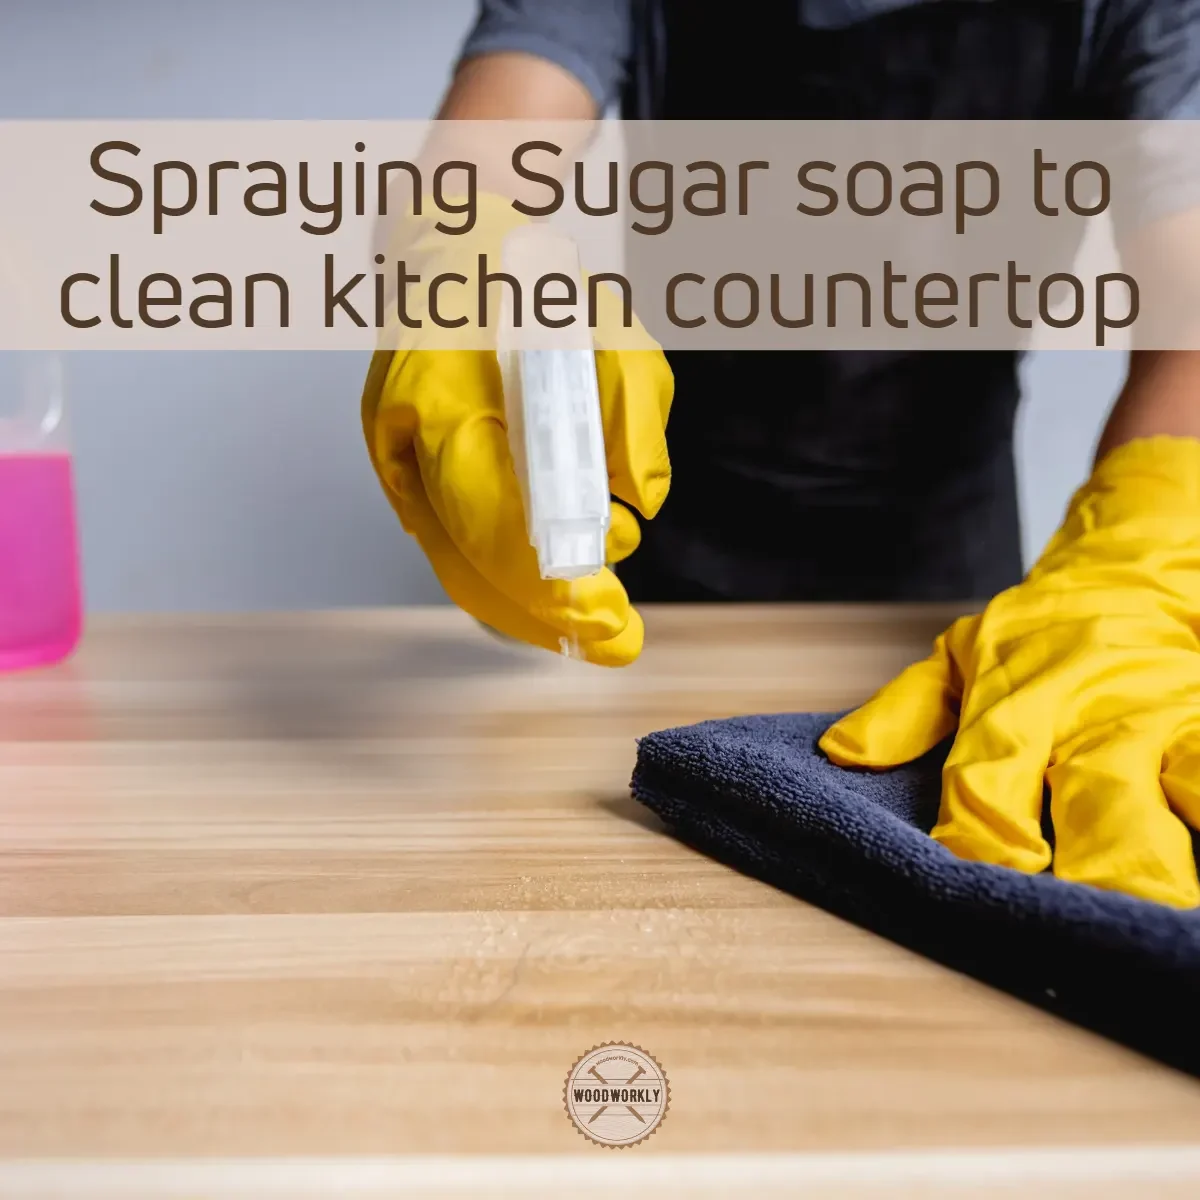 Spraying Sugar soap to clean kitchen countertop